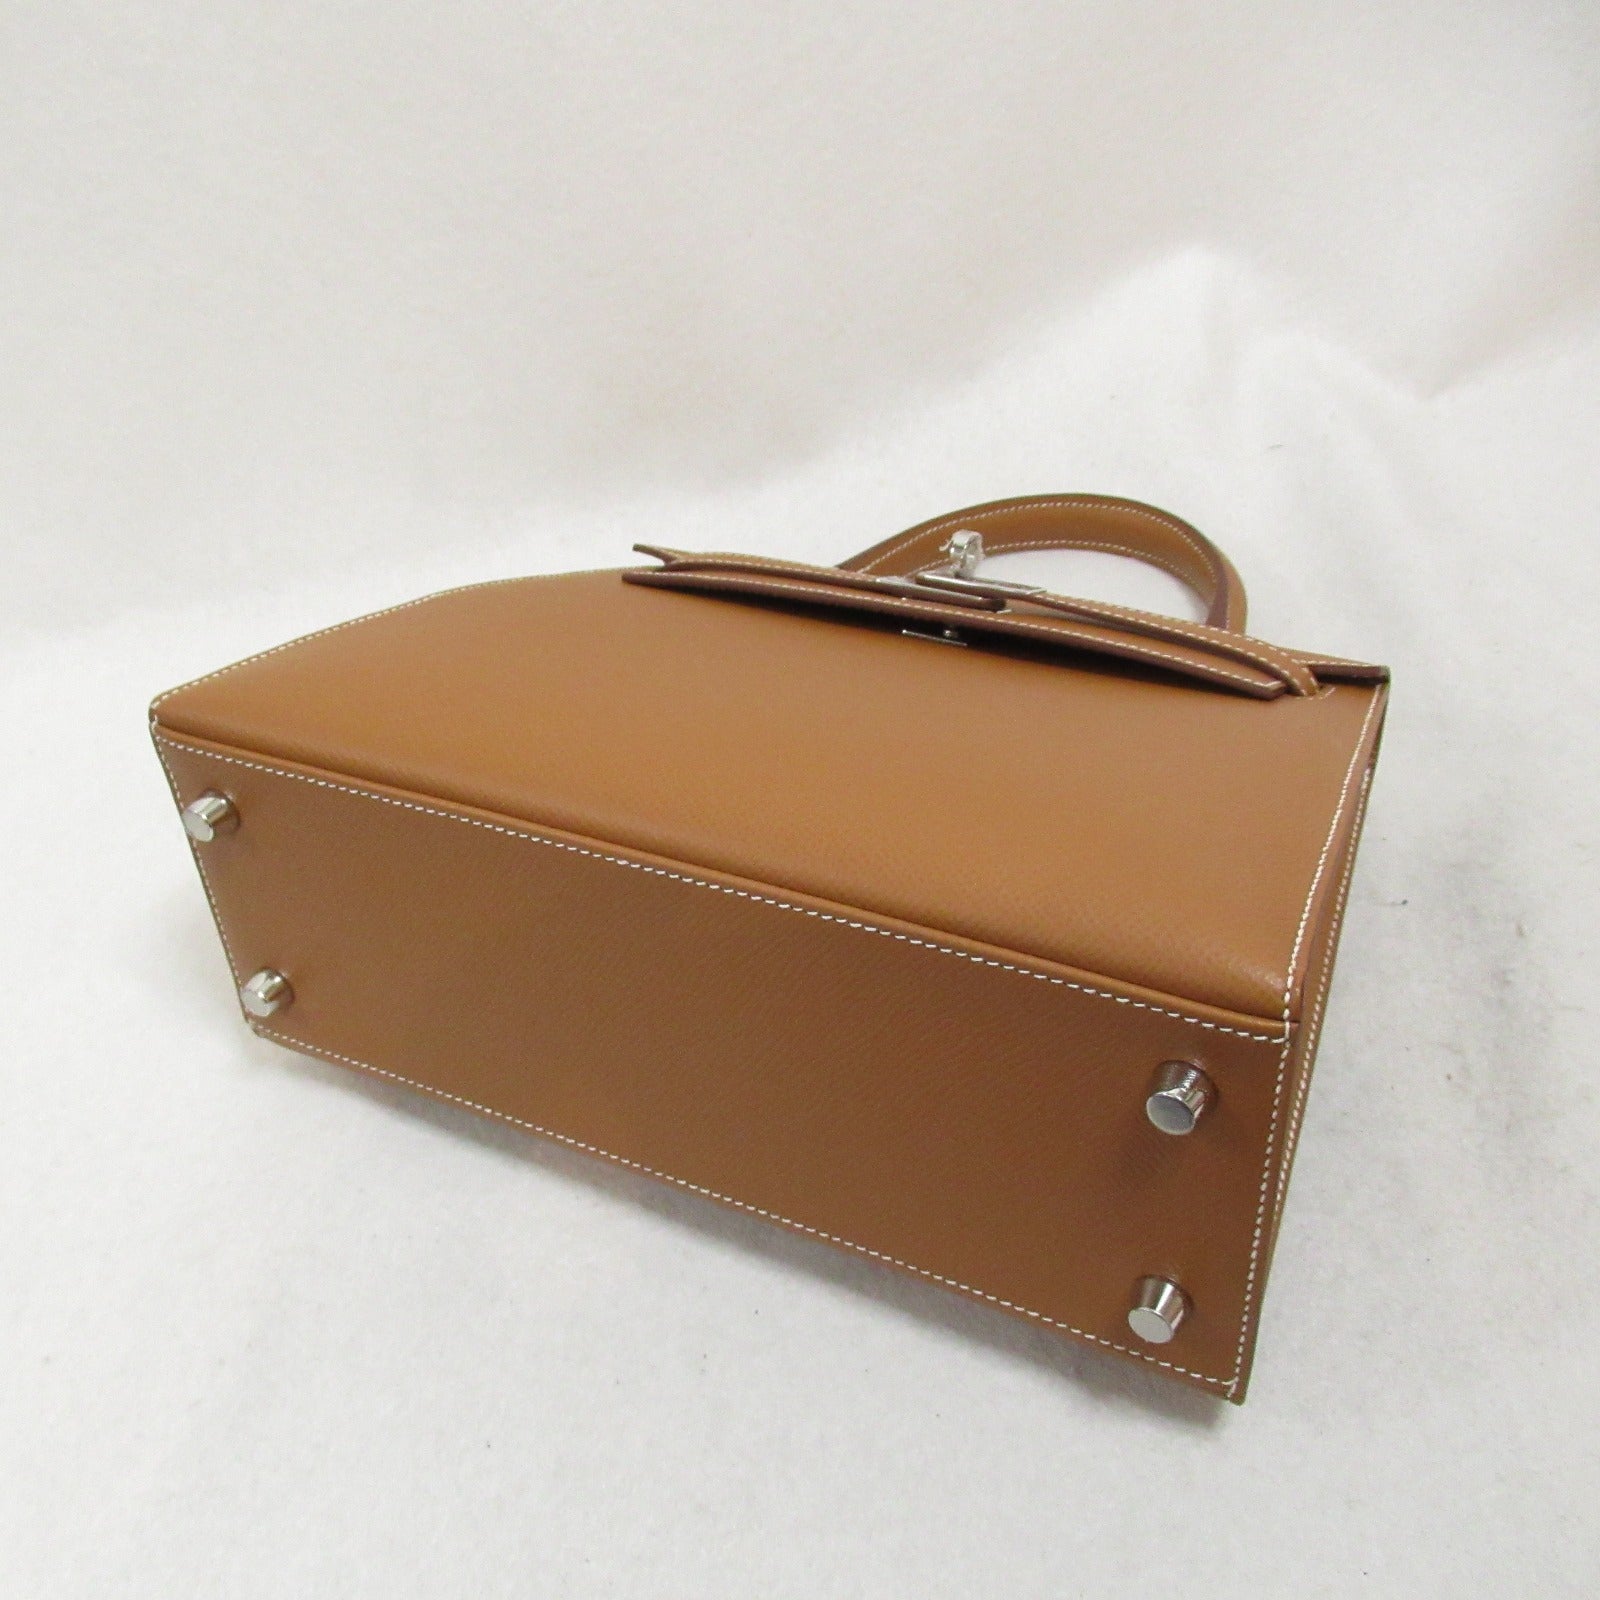 Hermes Kelly 25 G Handbag Outdoor Sewing Handbag Leather Epsom  Gold